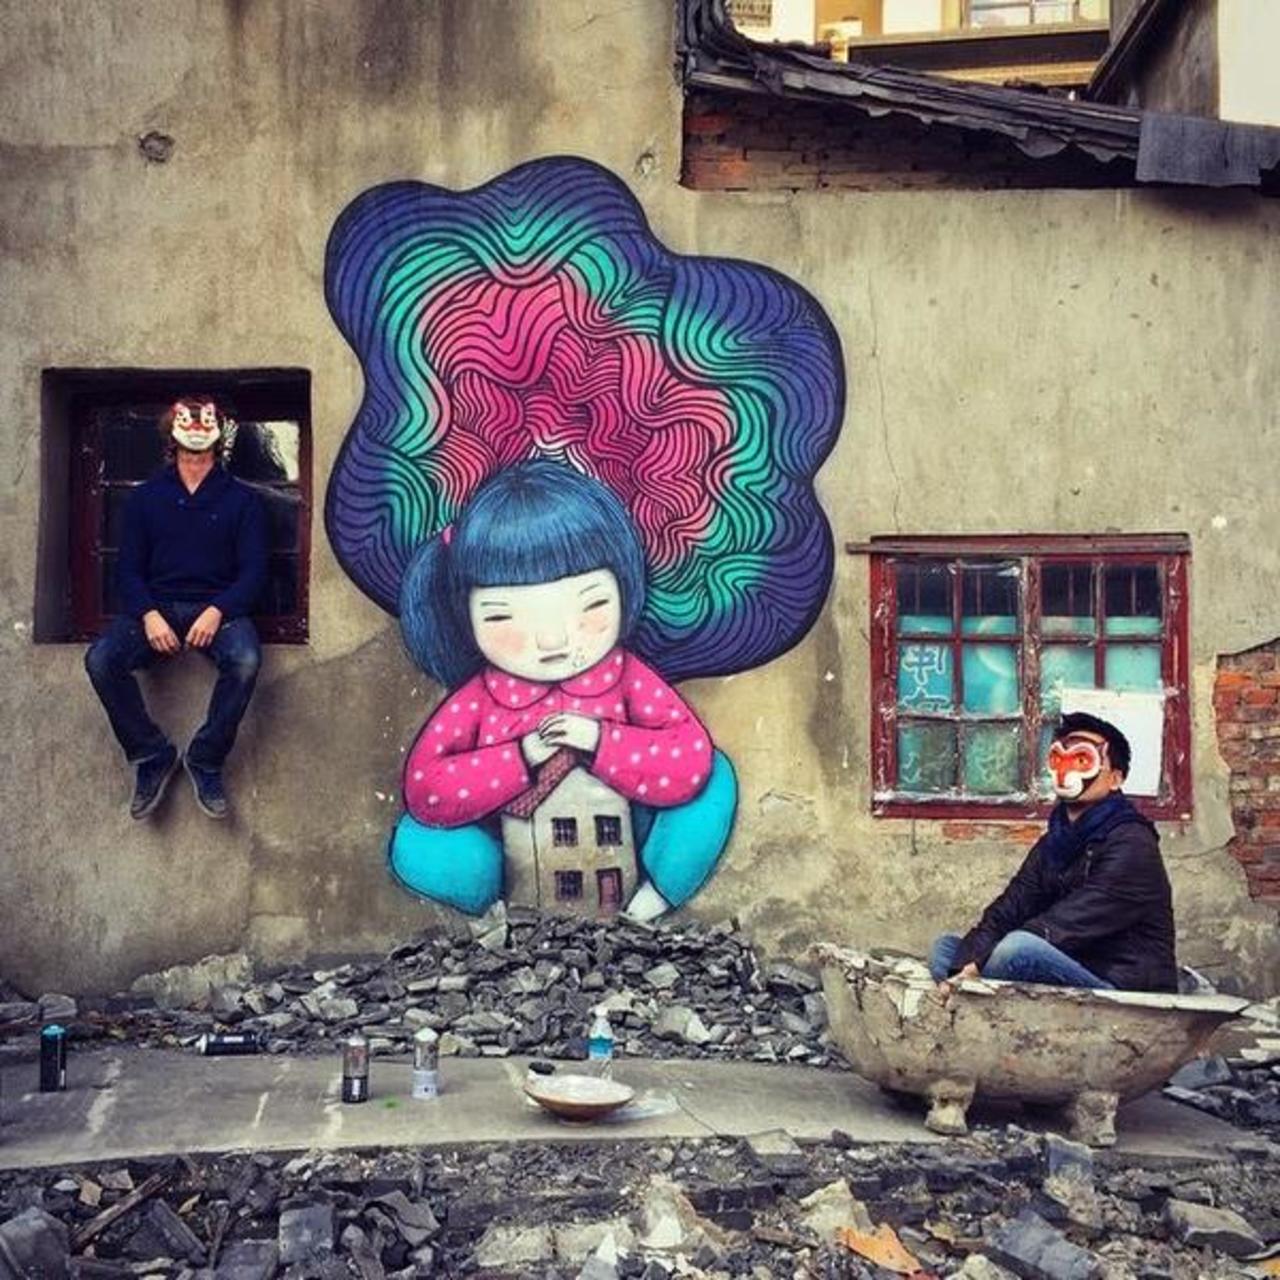 RT @brunokeyser: “@hypatia373: #art #streetart #graffiti http://t.co/L45GA9NJp4”